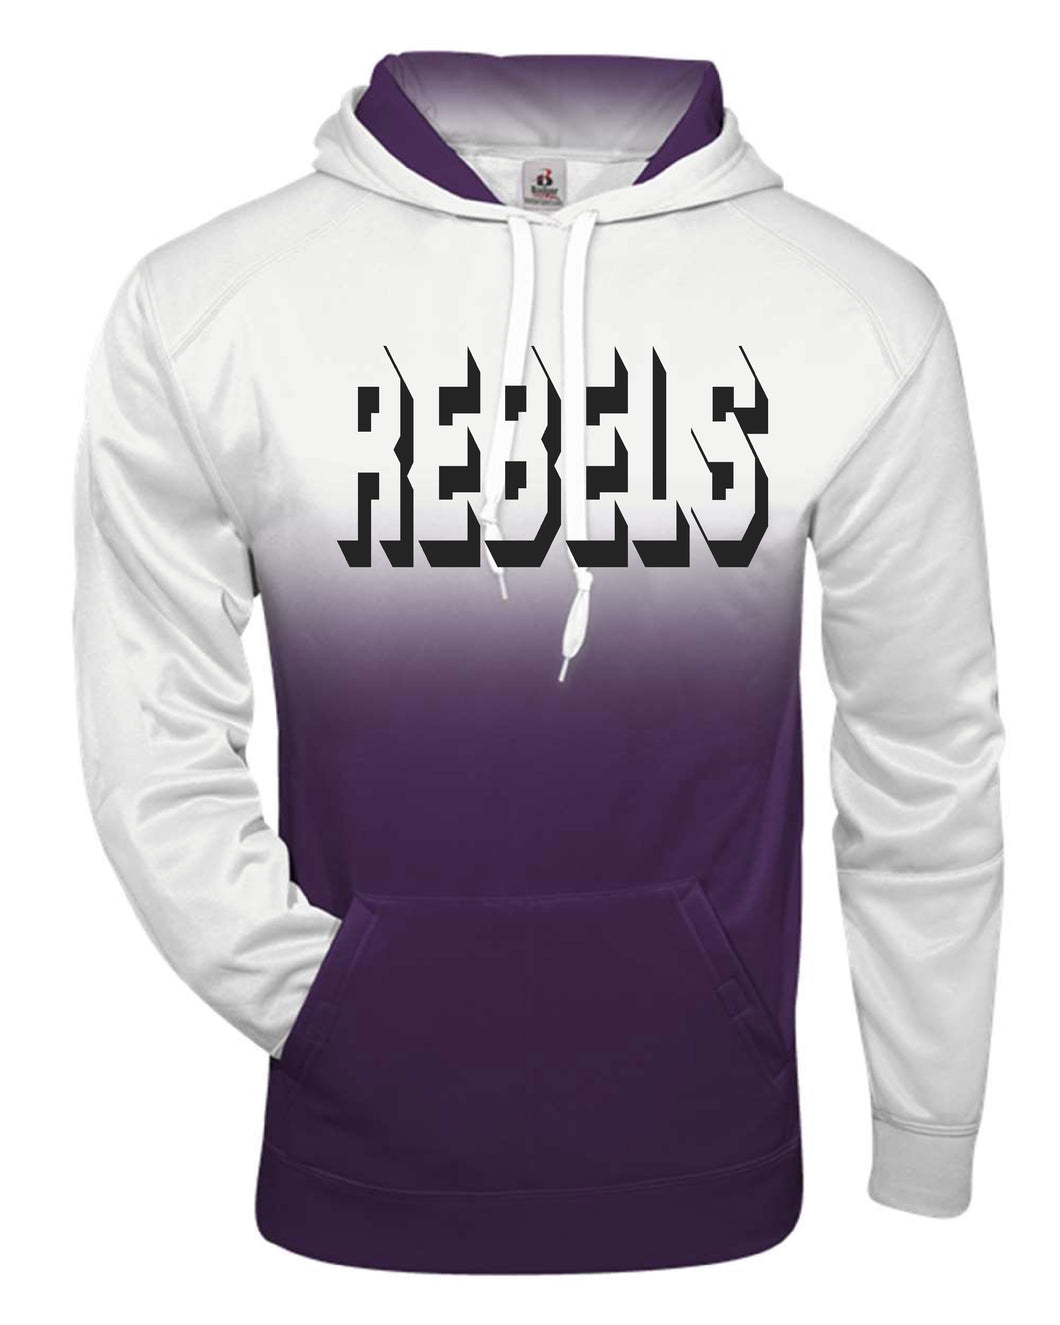 REBELS Badger - Adult Ombre Hooded Sweatshirt  Black or Purple